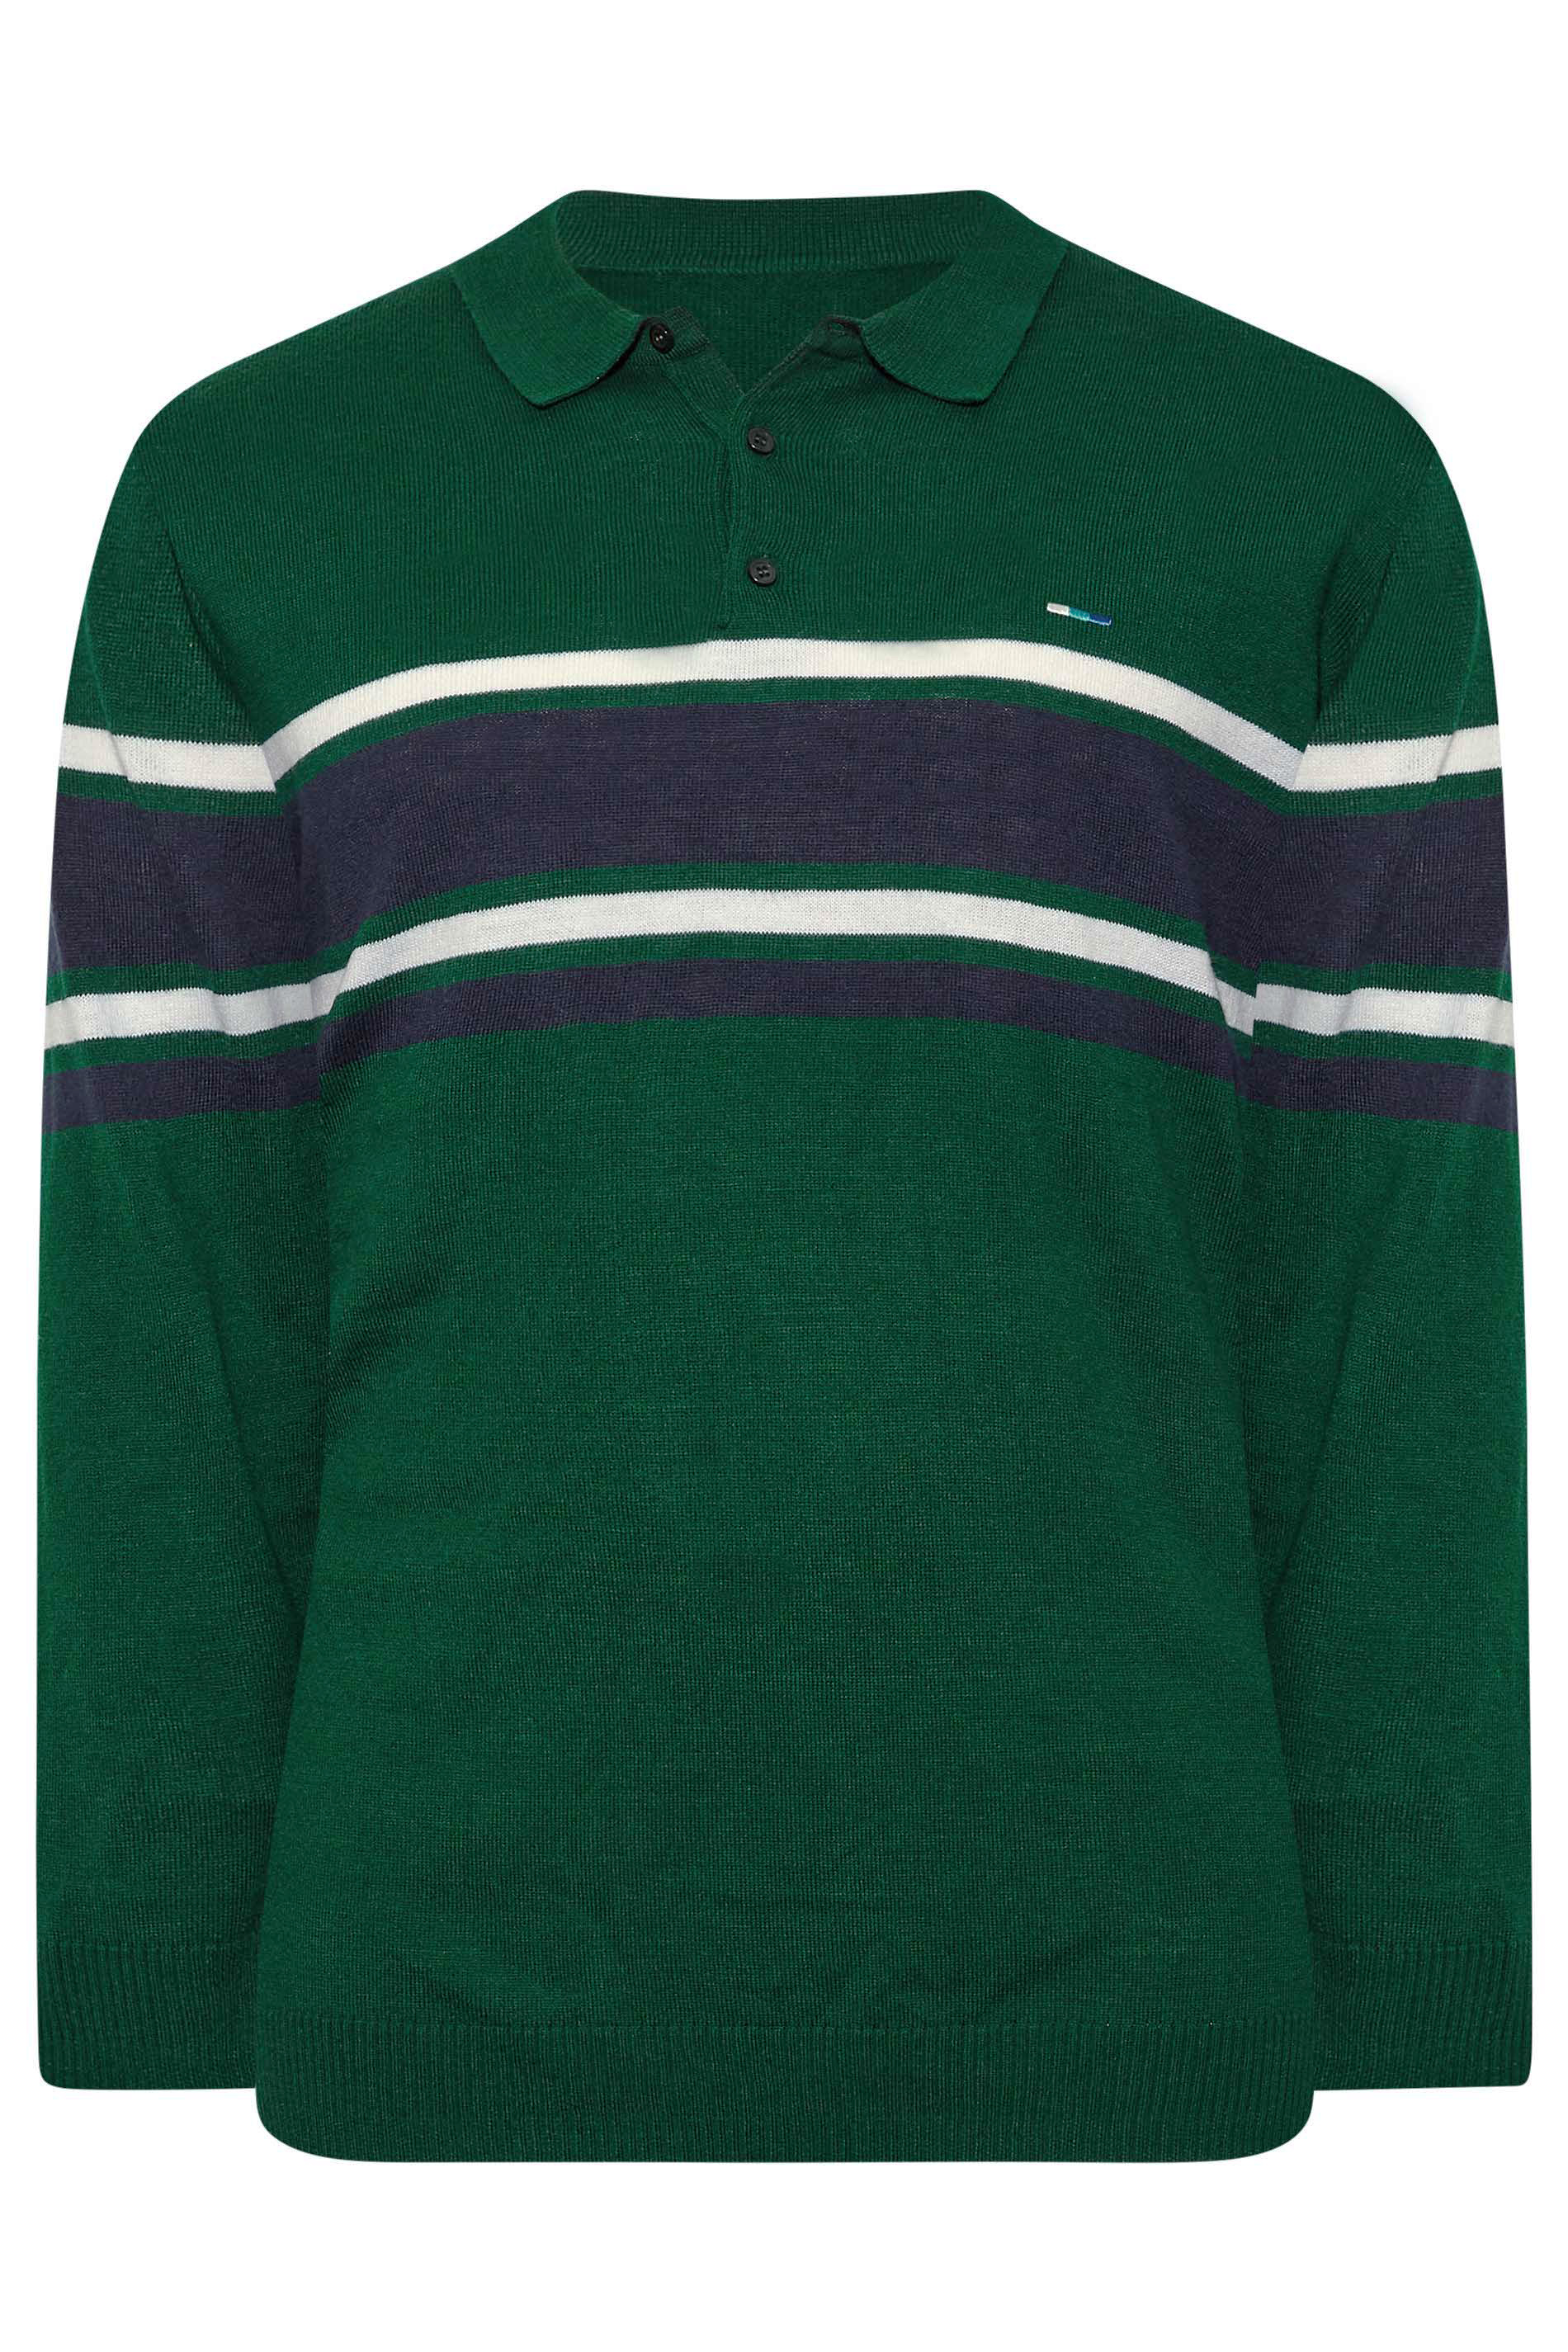 BadRhino Big & Tall Forest Green Stripe Long Sleeve Knitted Polo Shirt | BadRhino 3